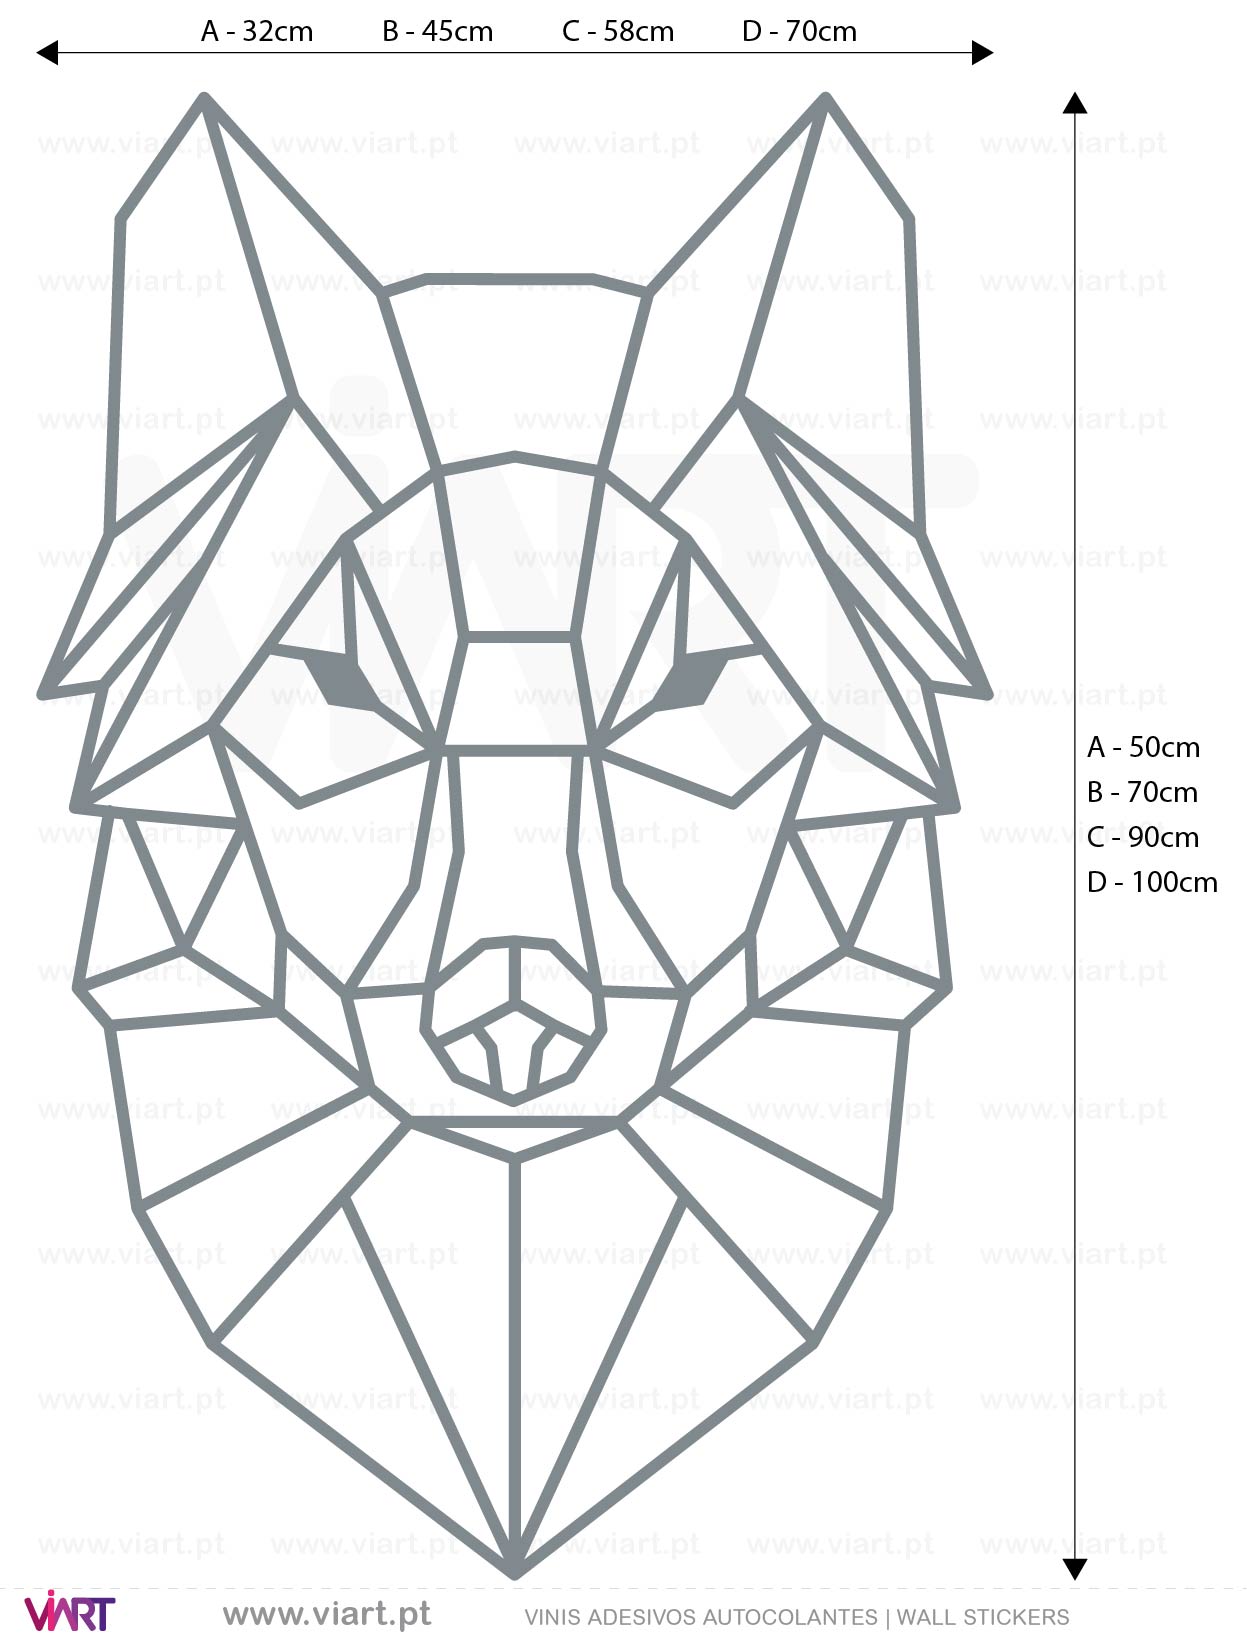 Viart - WALL STICKERS - Geometric Wolf Head Decal! Origami! Medidas